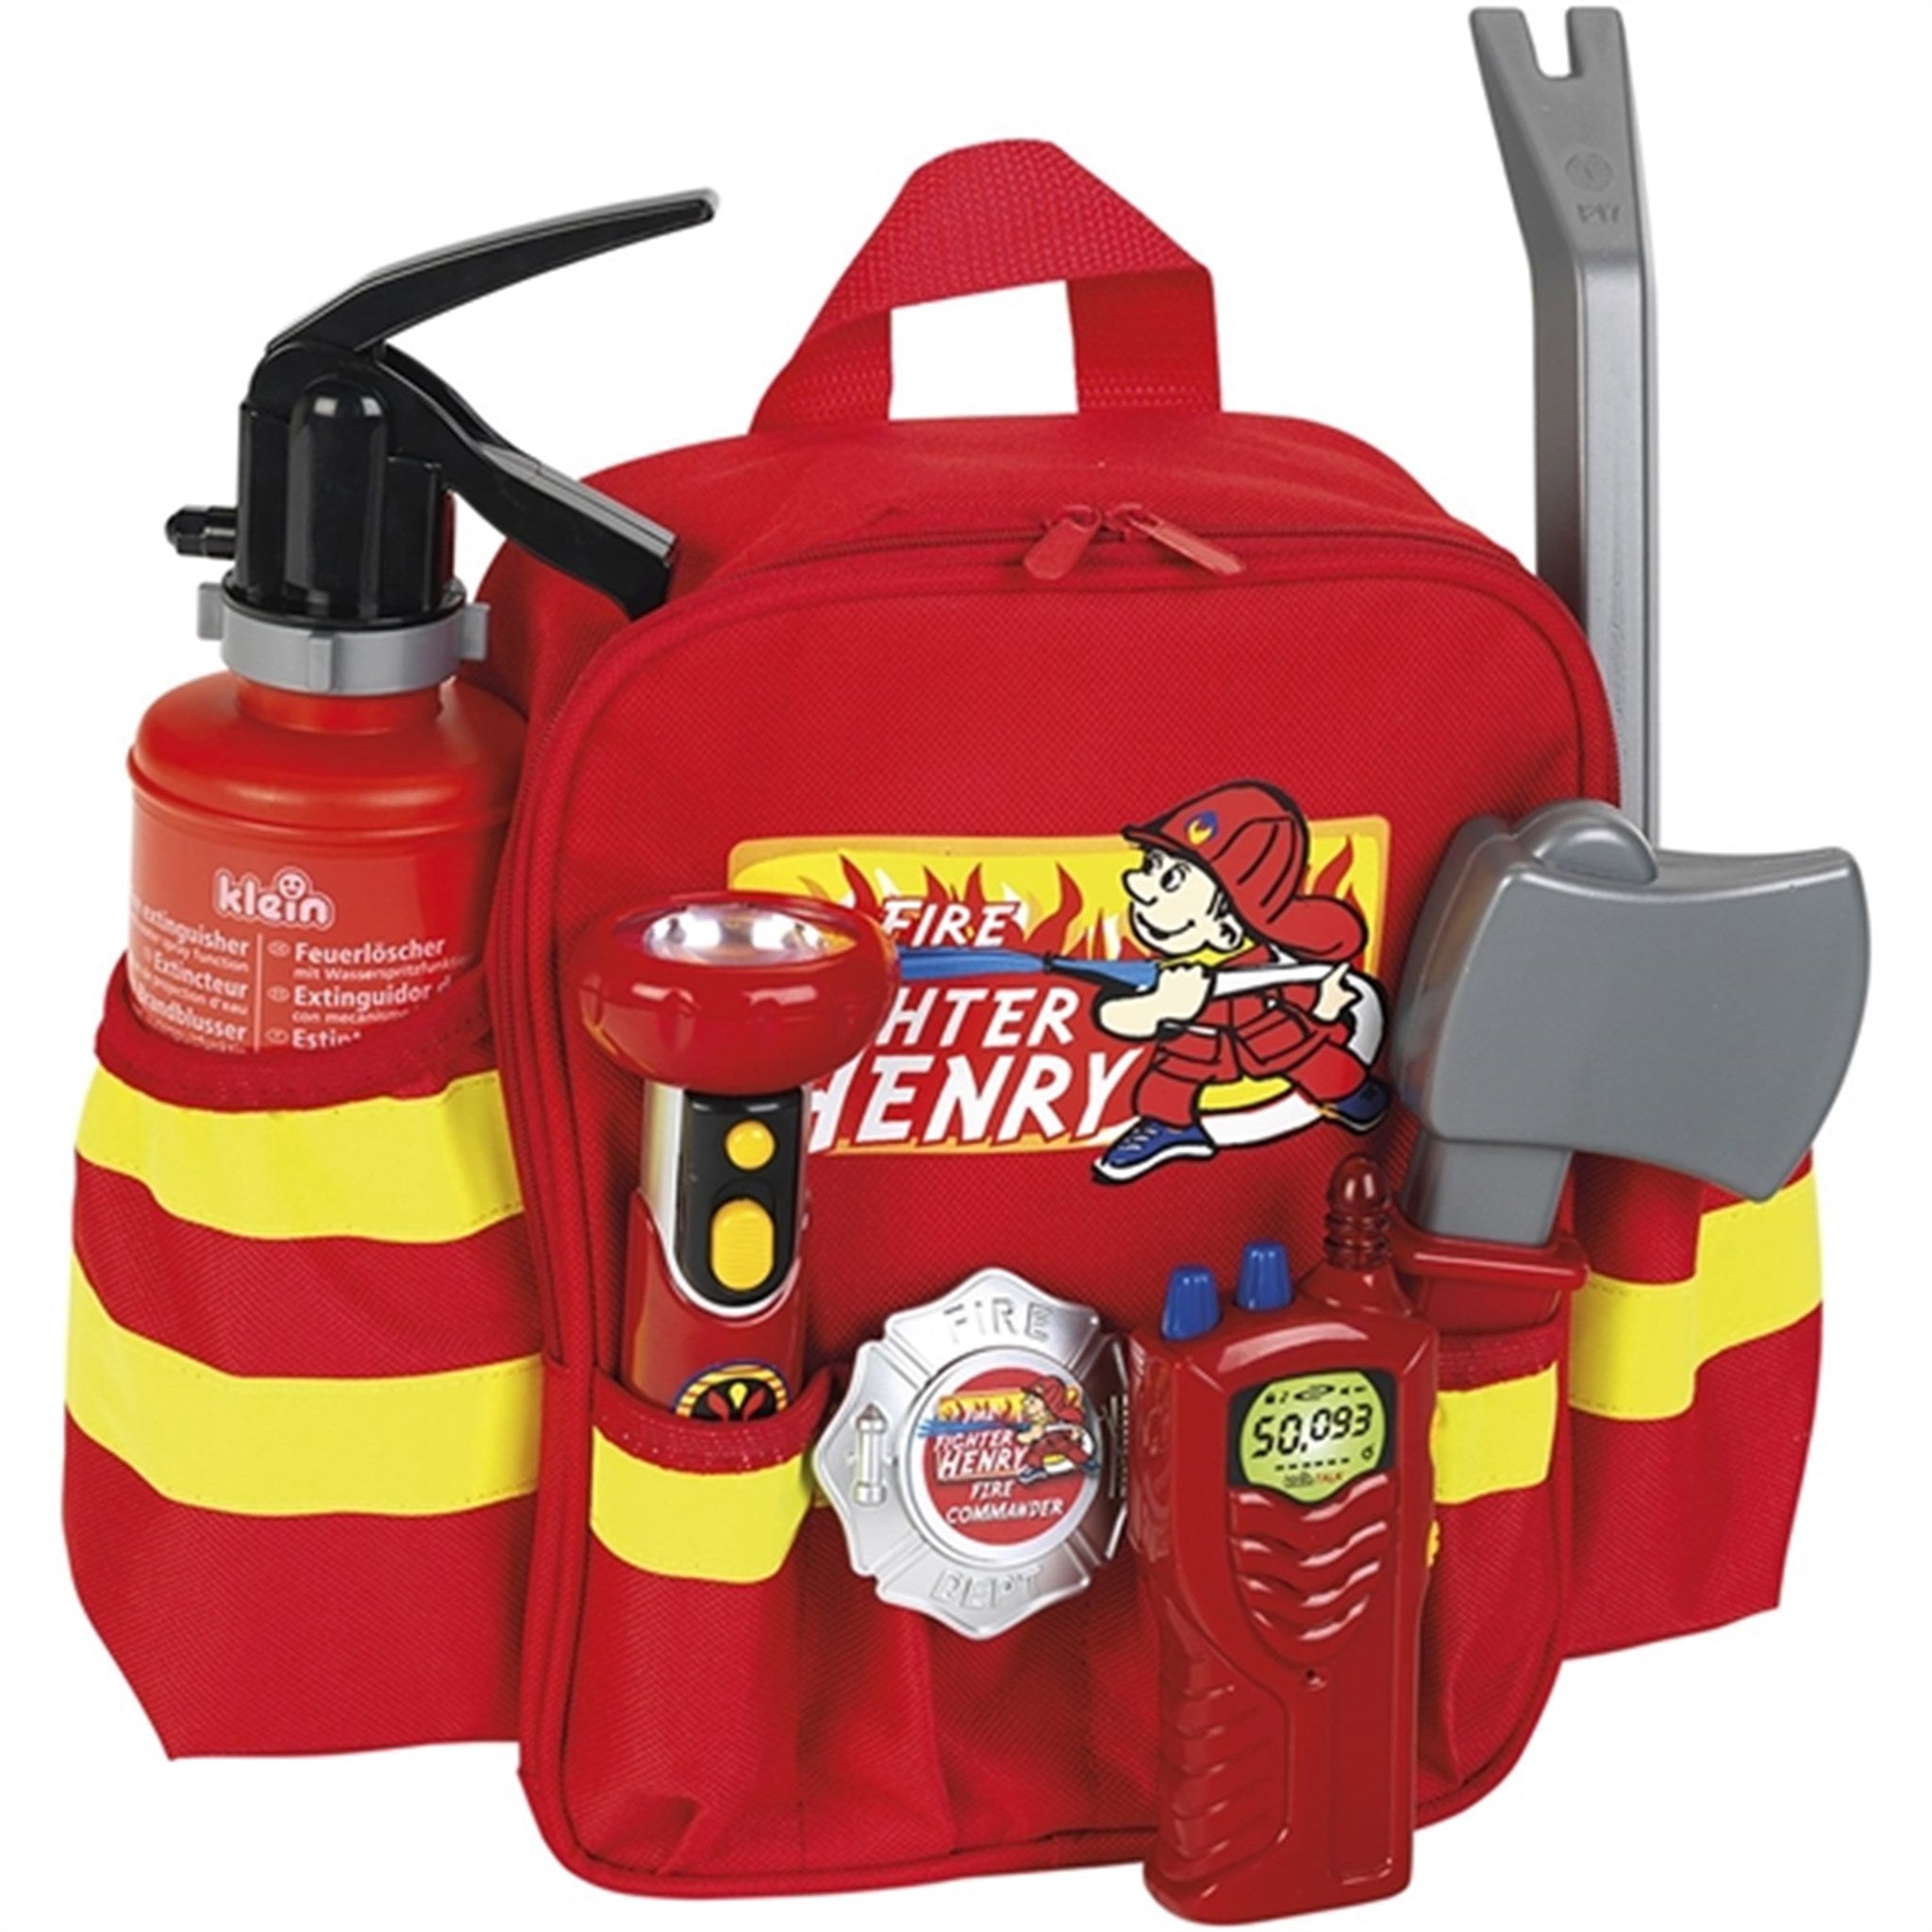 Klein Fireman's Backpack